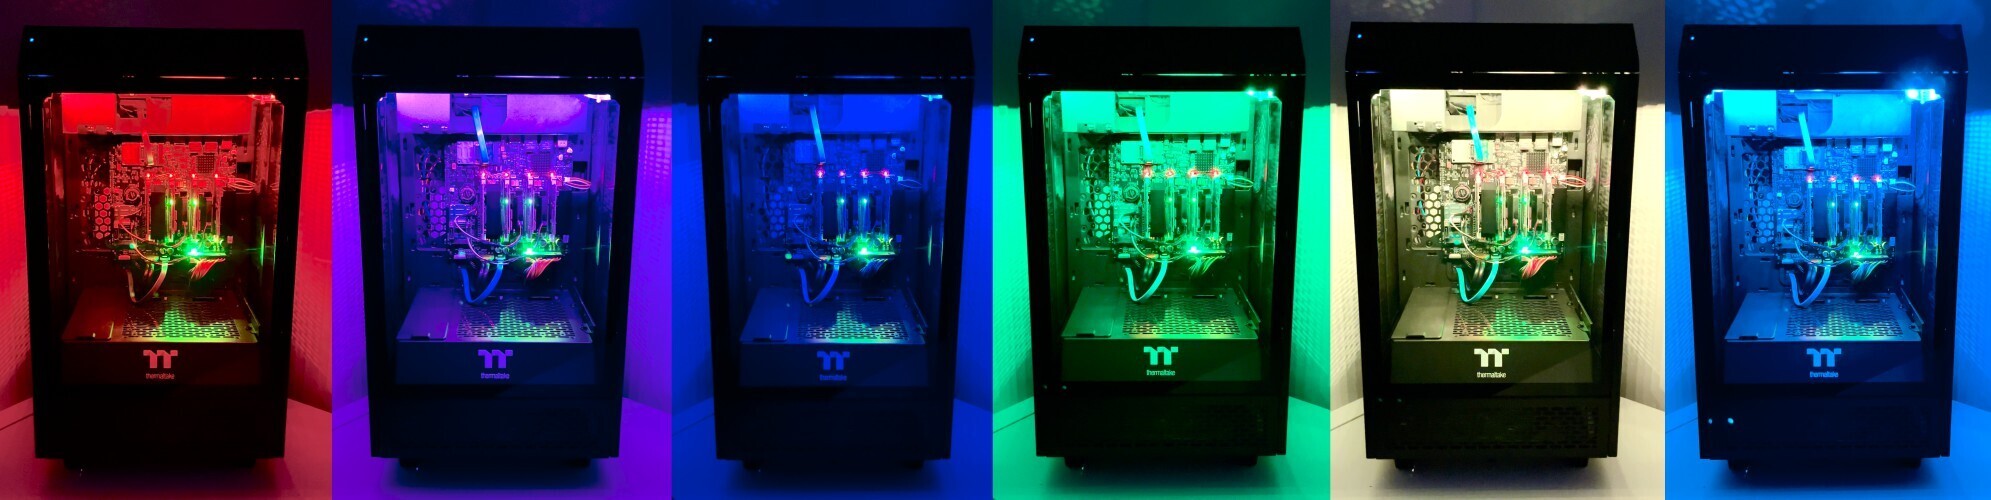 RGB LED Lighting in my homelab server case